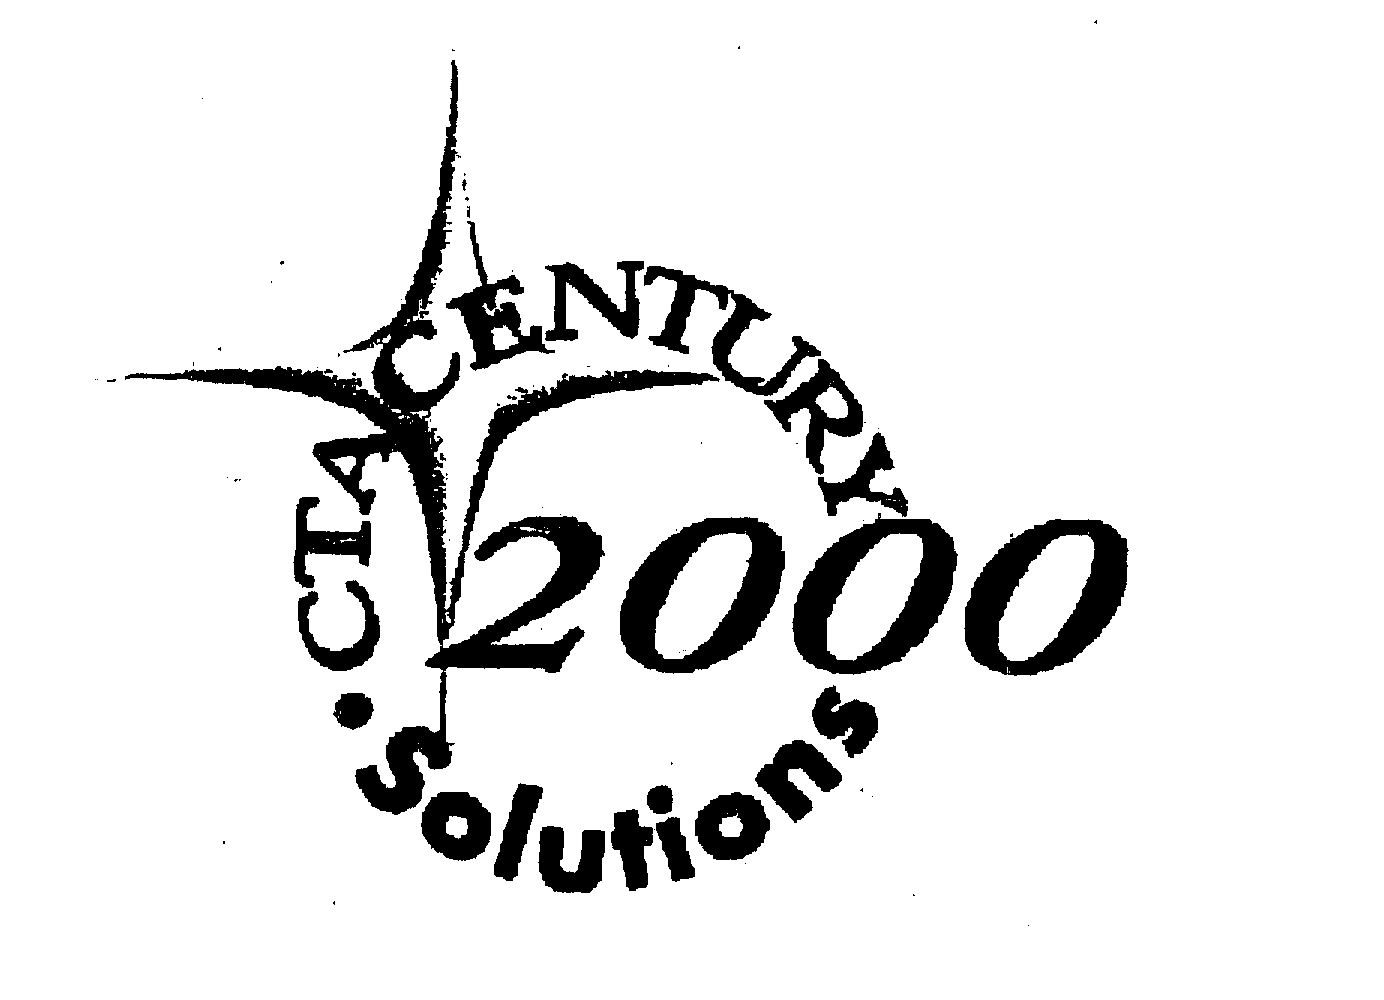  CTA CENTURY SOLUTIONS 2000